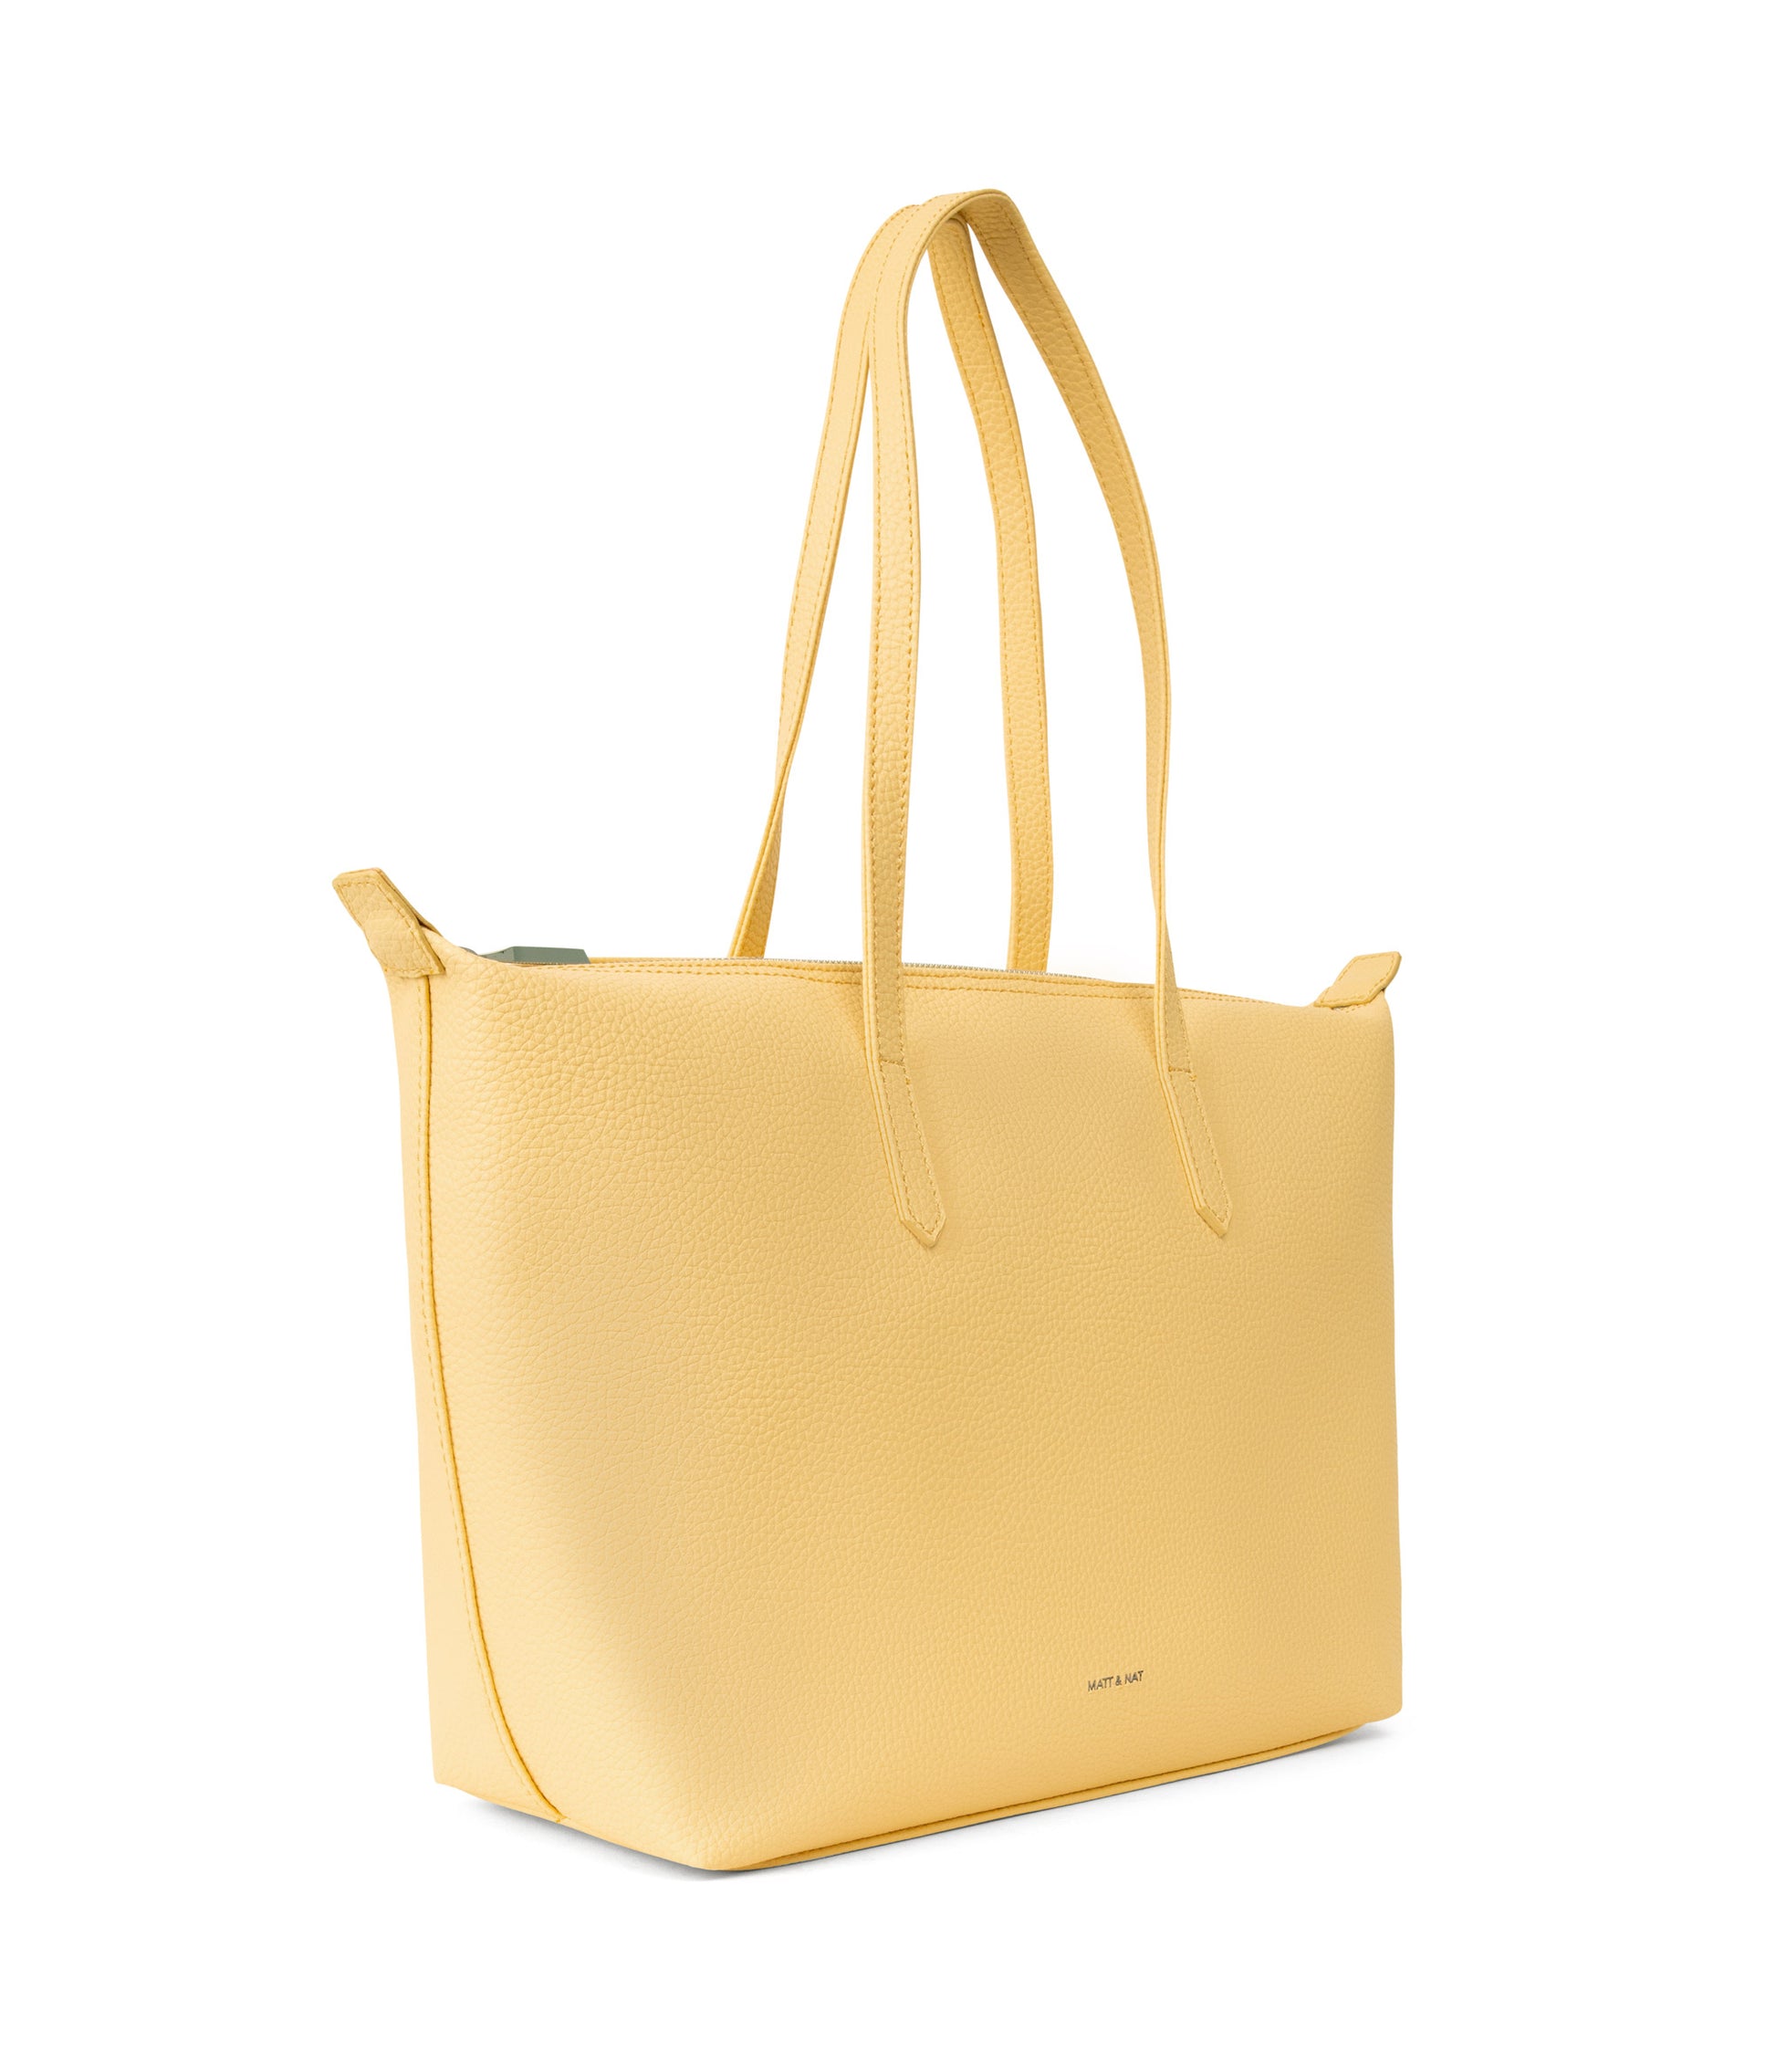 ABBI Vegan Tote Bag - Purity | Color: Yellow - variant::zest